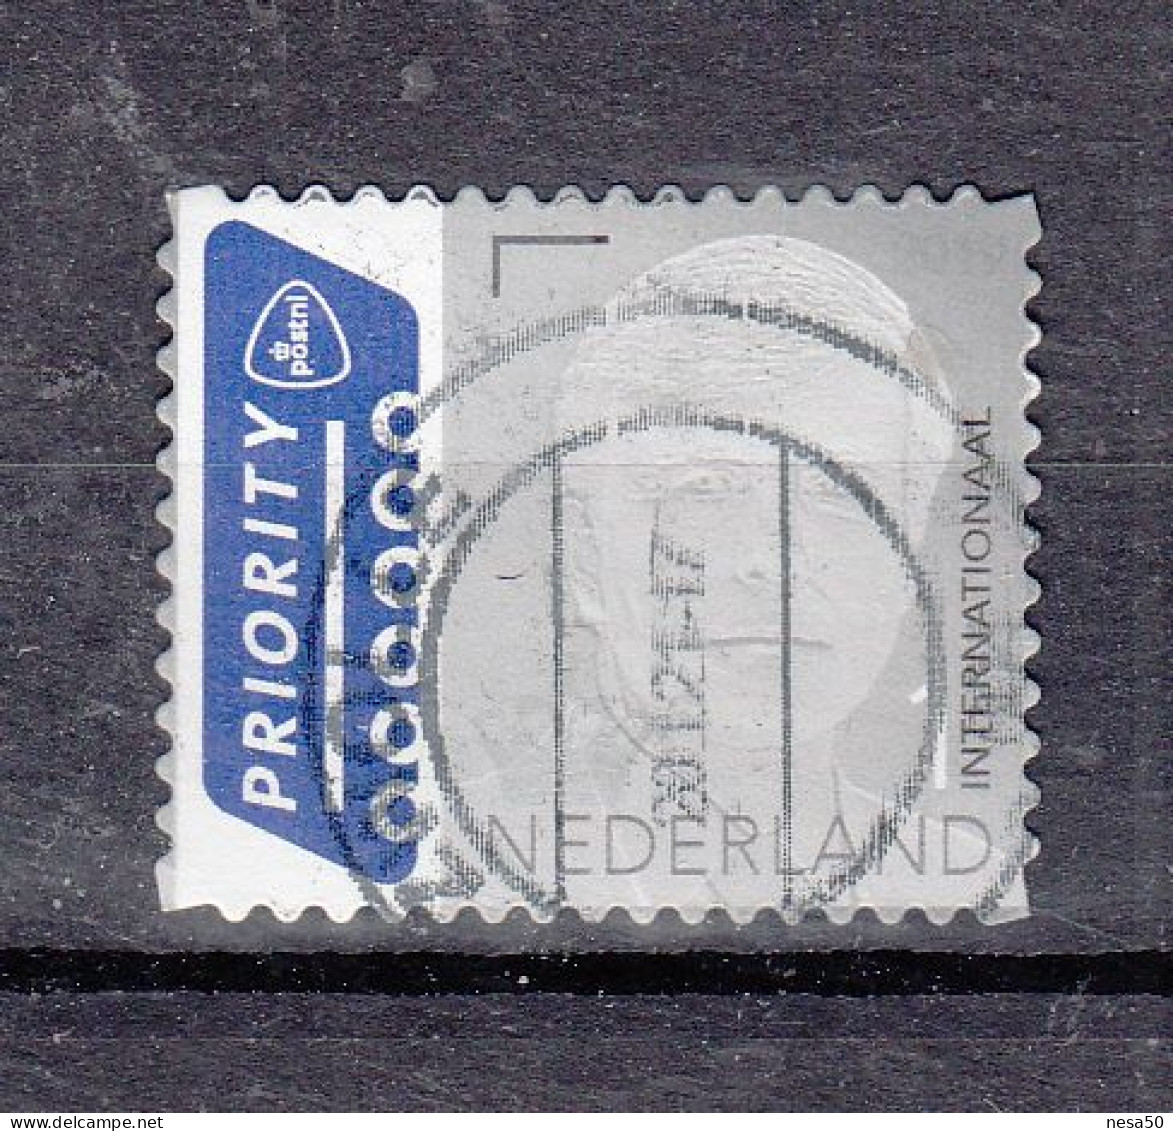 Nederland 2019, Nvph Nr 3811, Internationaal, Koning Willem Alexander Jaartal 2019 - Used Stamps